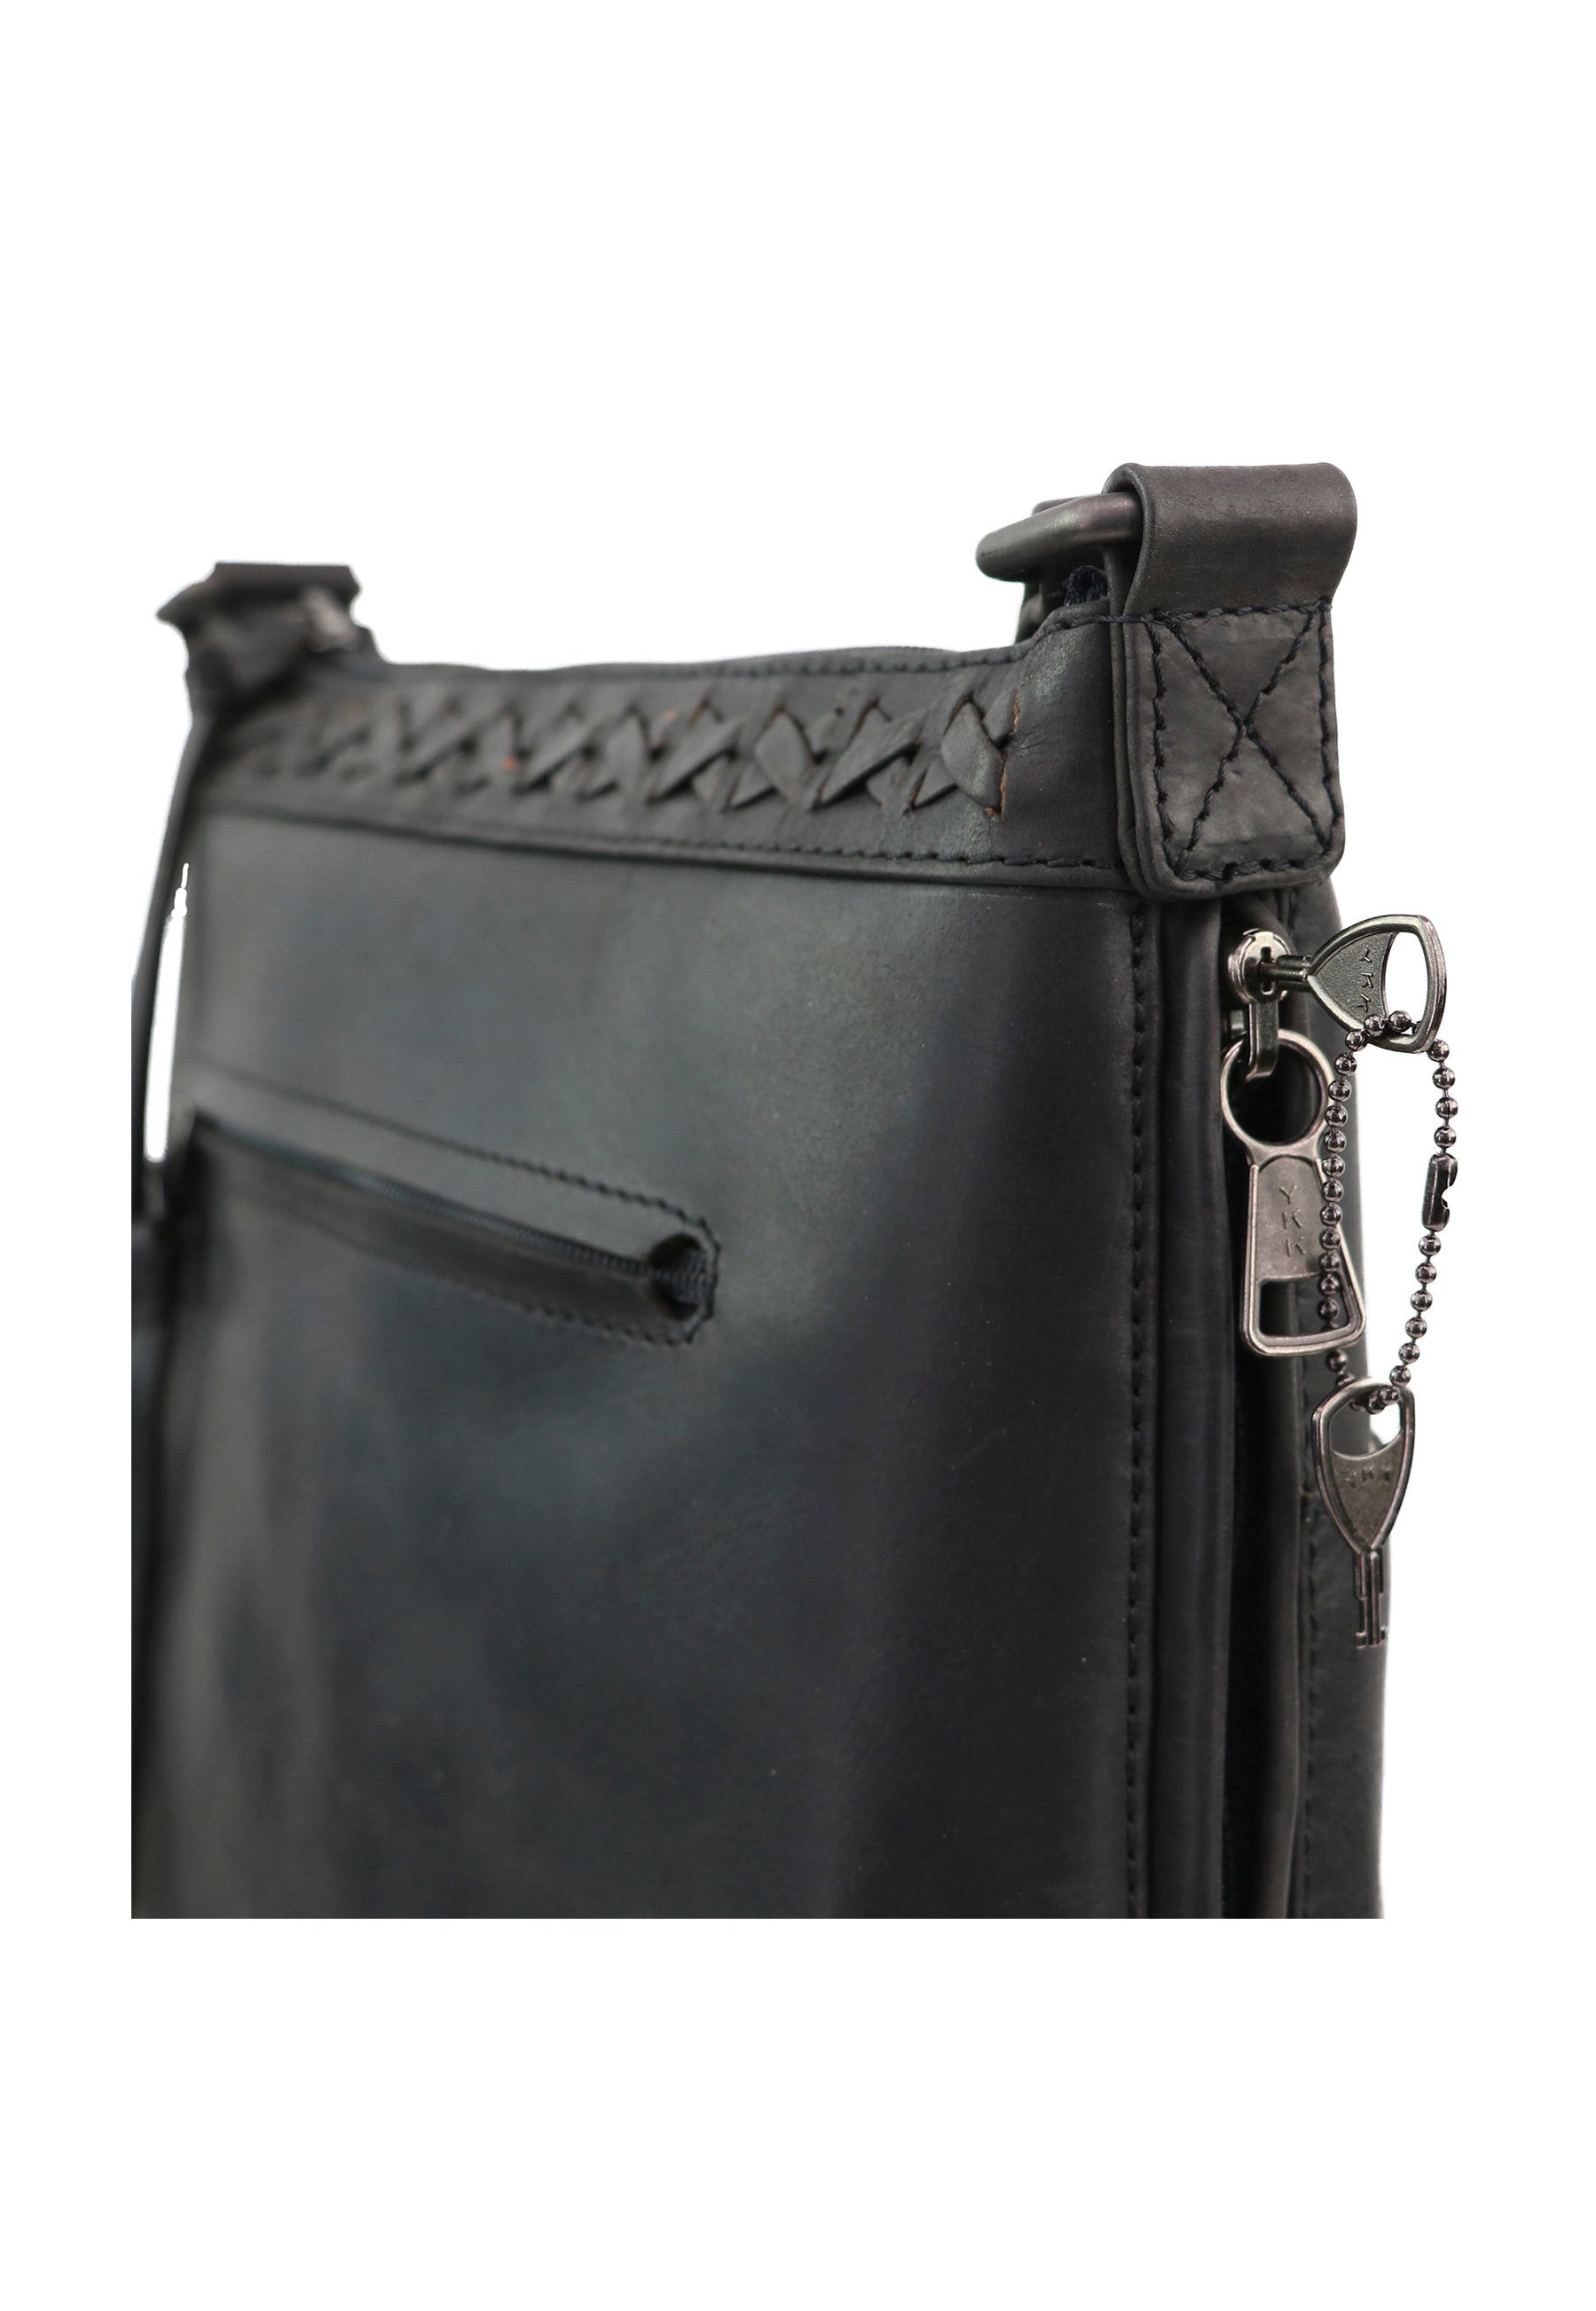 Angle view of nice black leather gun purse